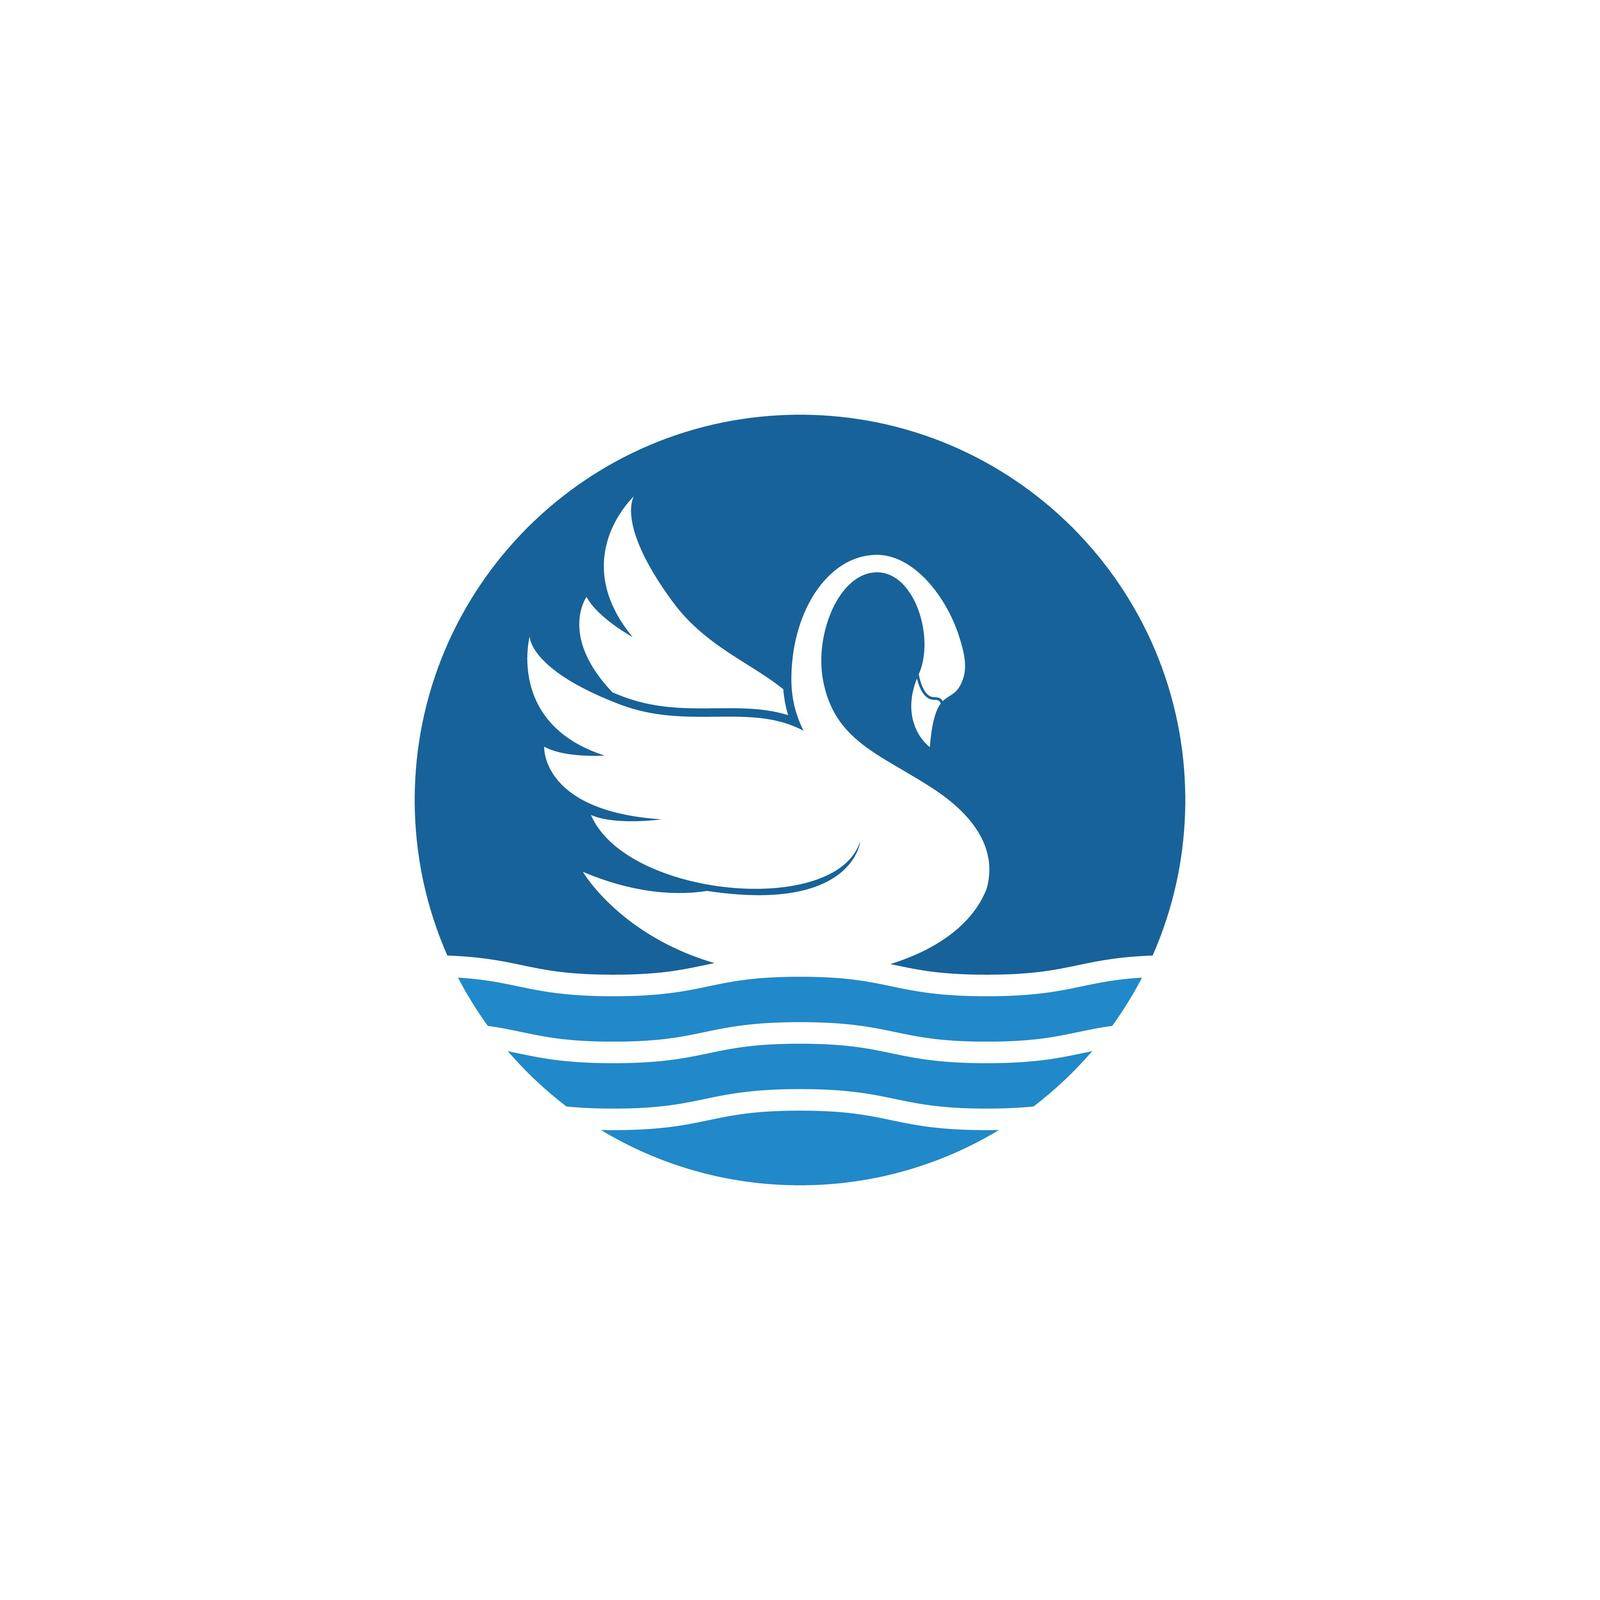 Swan illustration logo design template